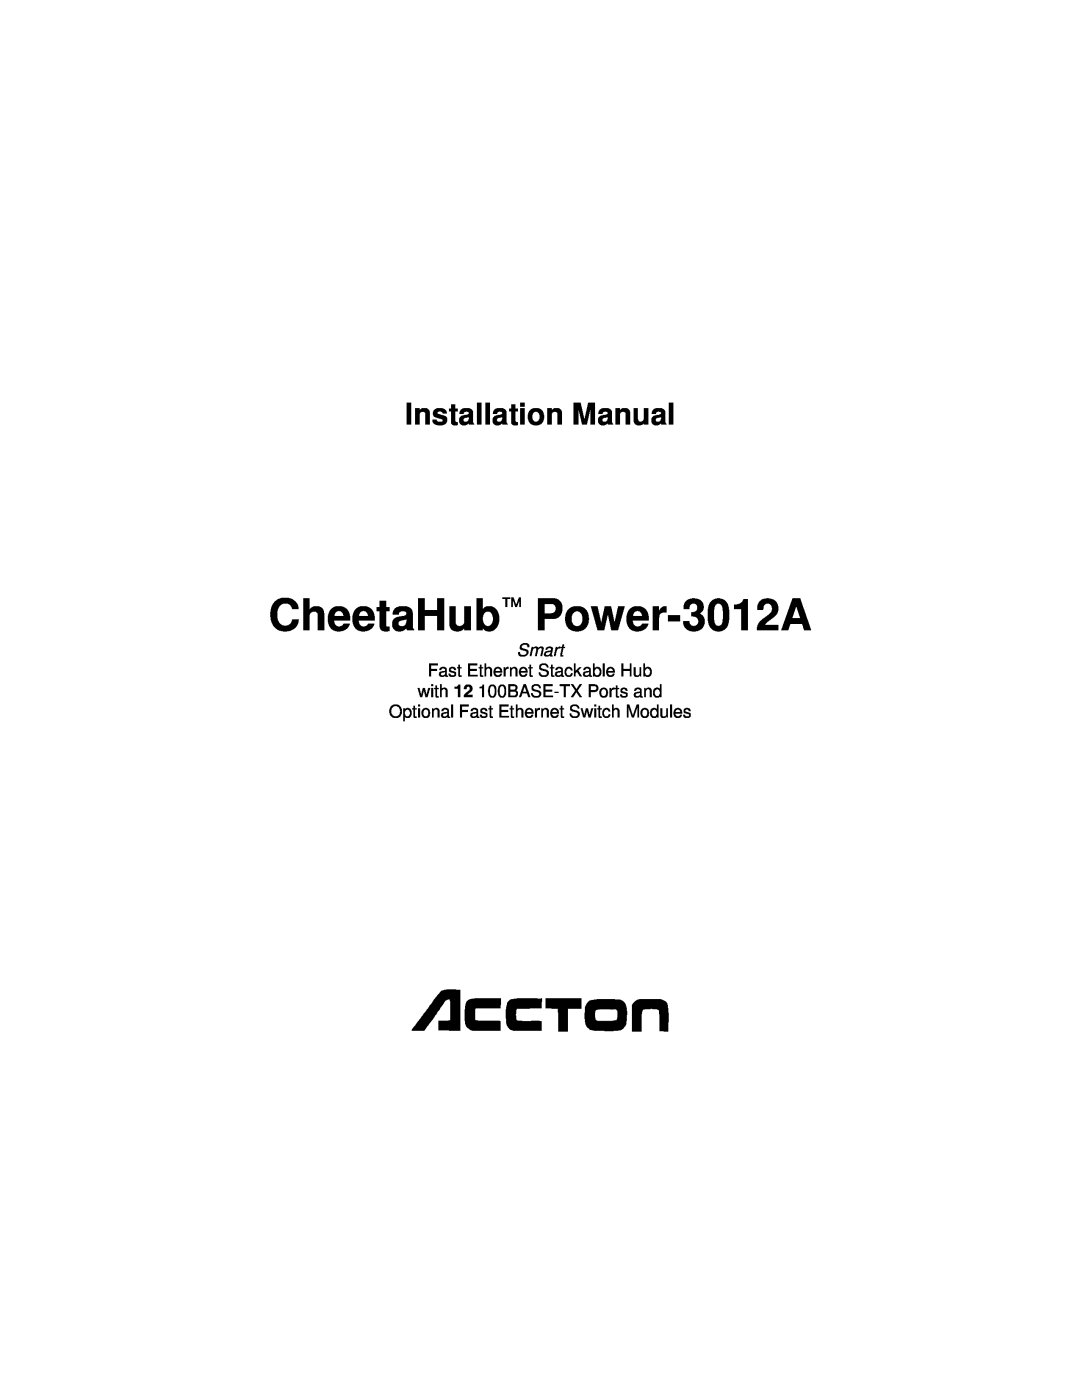 Accton Technology POWER-3012A manual CheetaHub Power-3012A, Installation Manual, Smart 